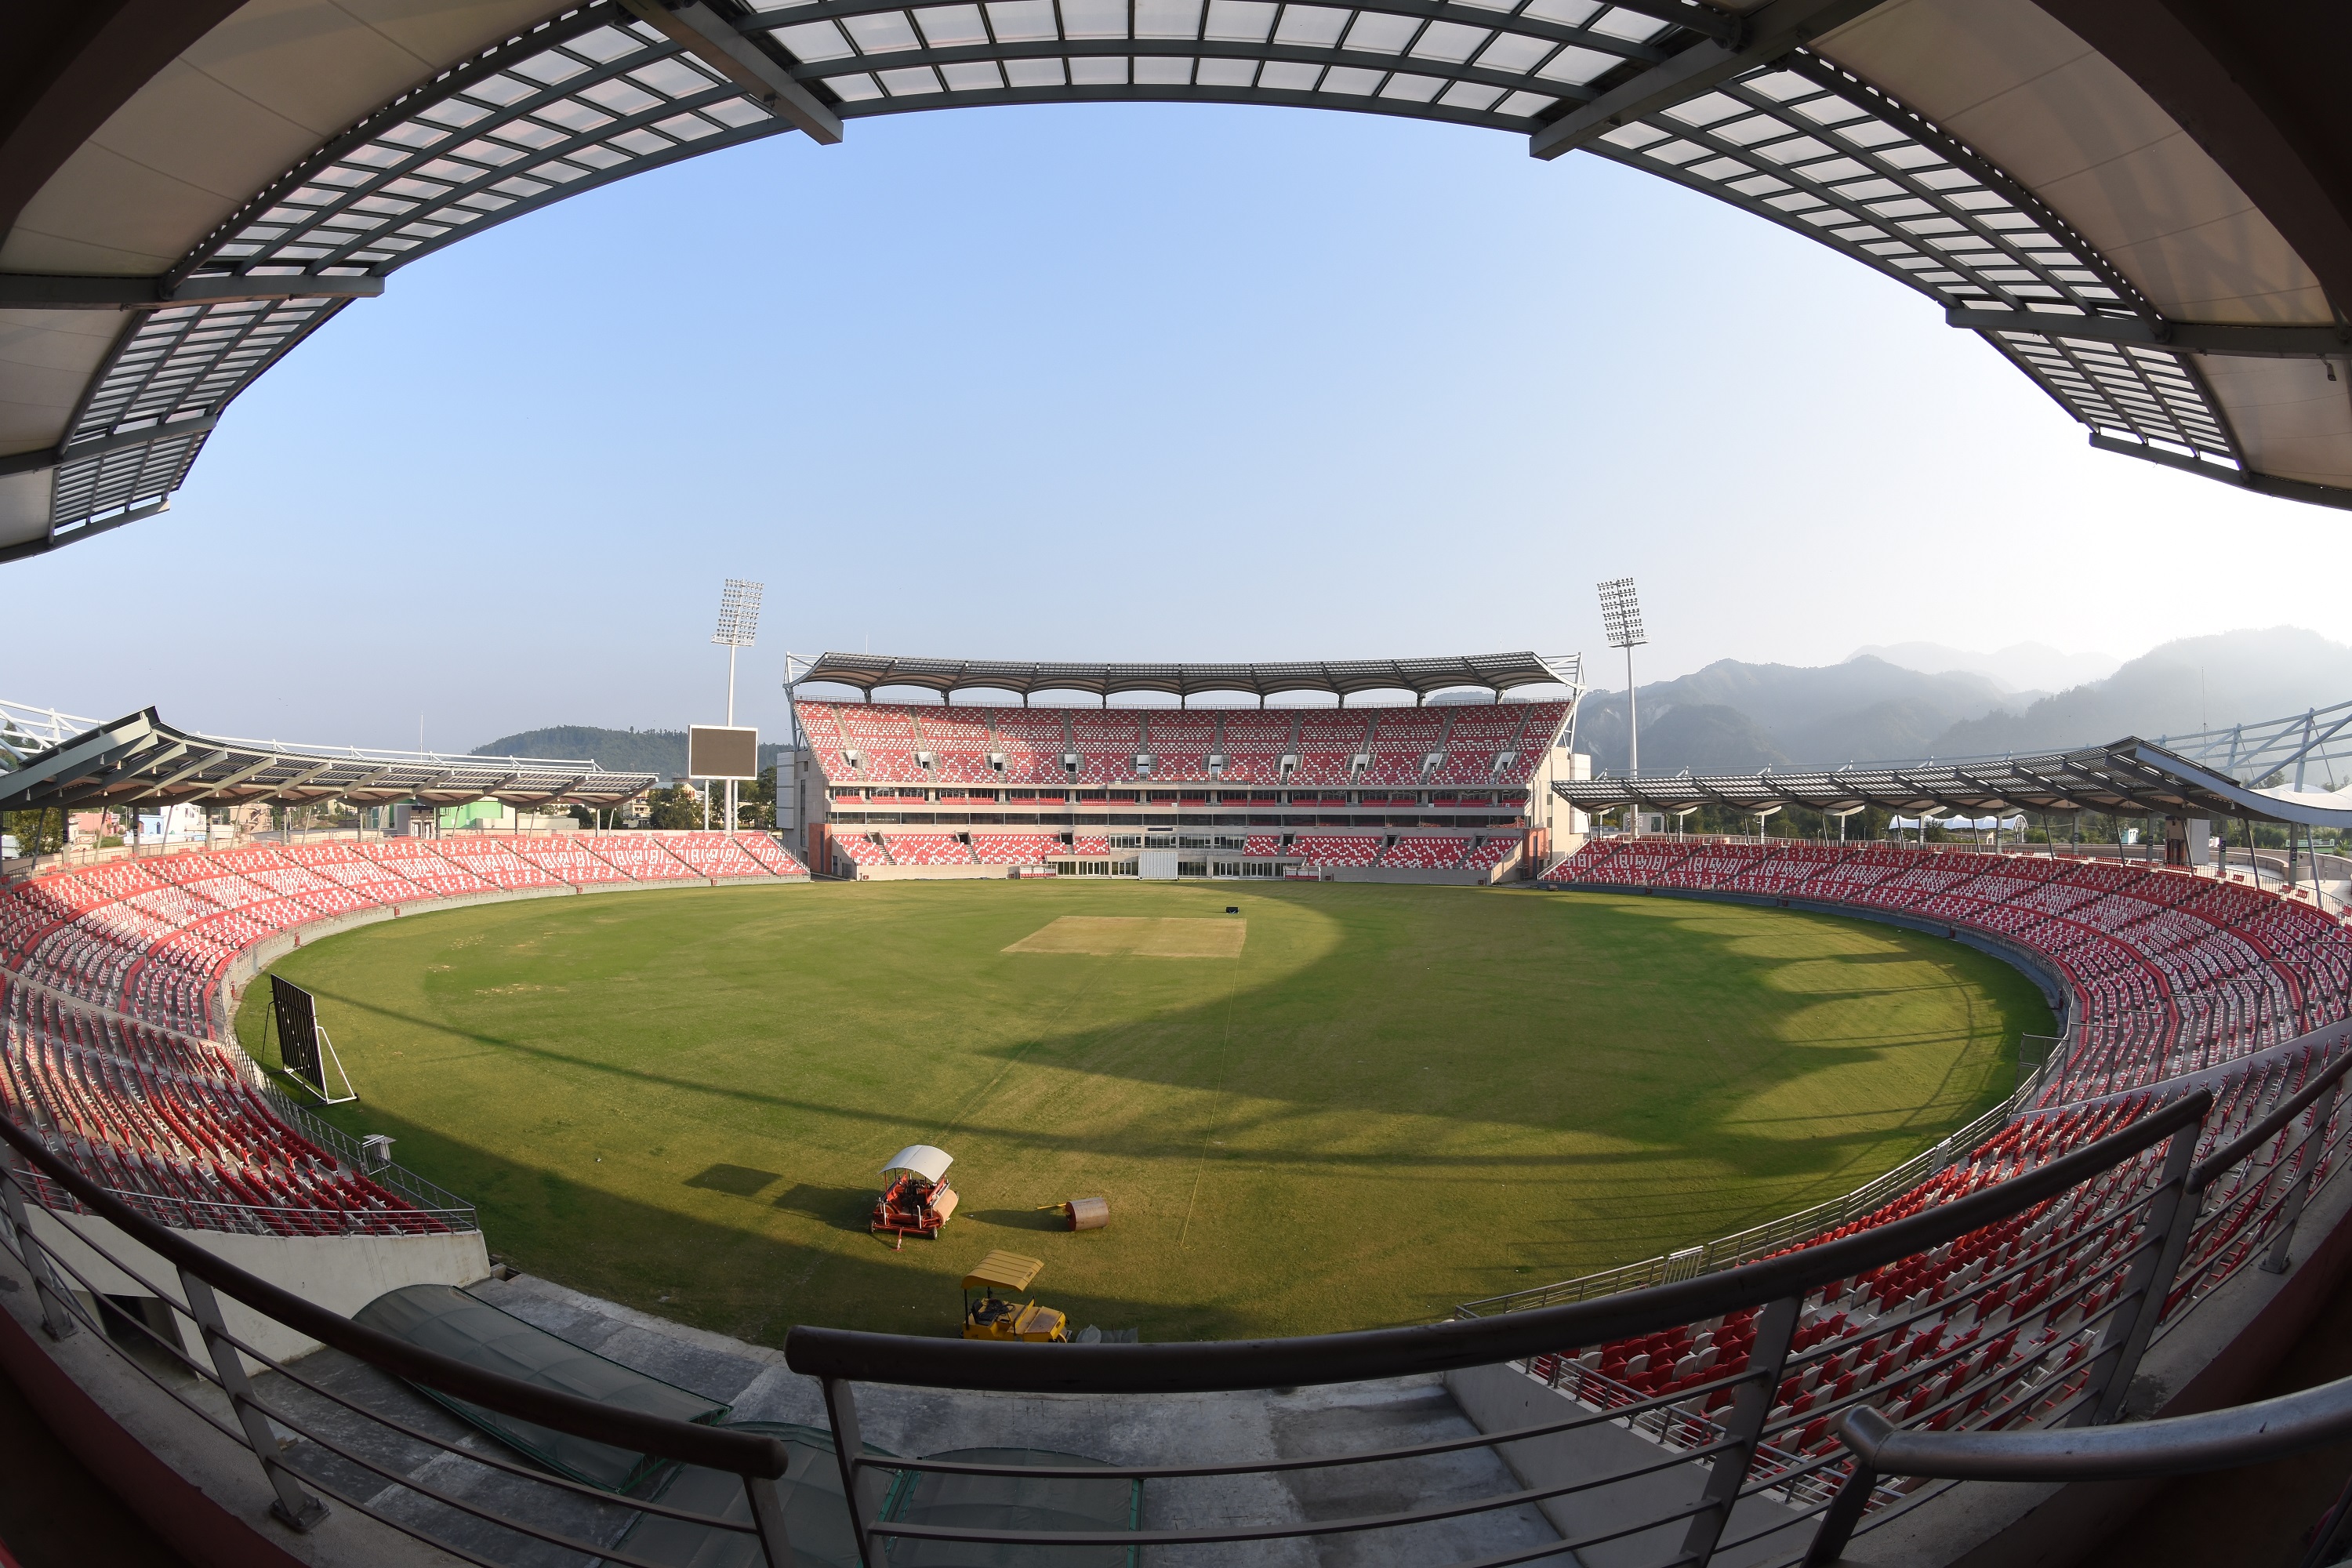 Rajiv Gandhi International Cricket Stadium in India, Central Asia | Cricket - Rated 7.6